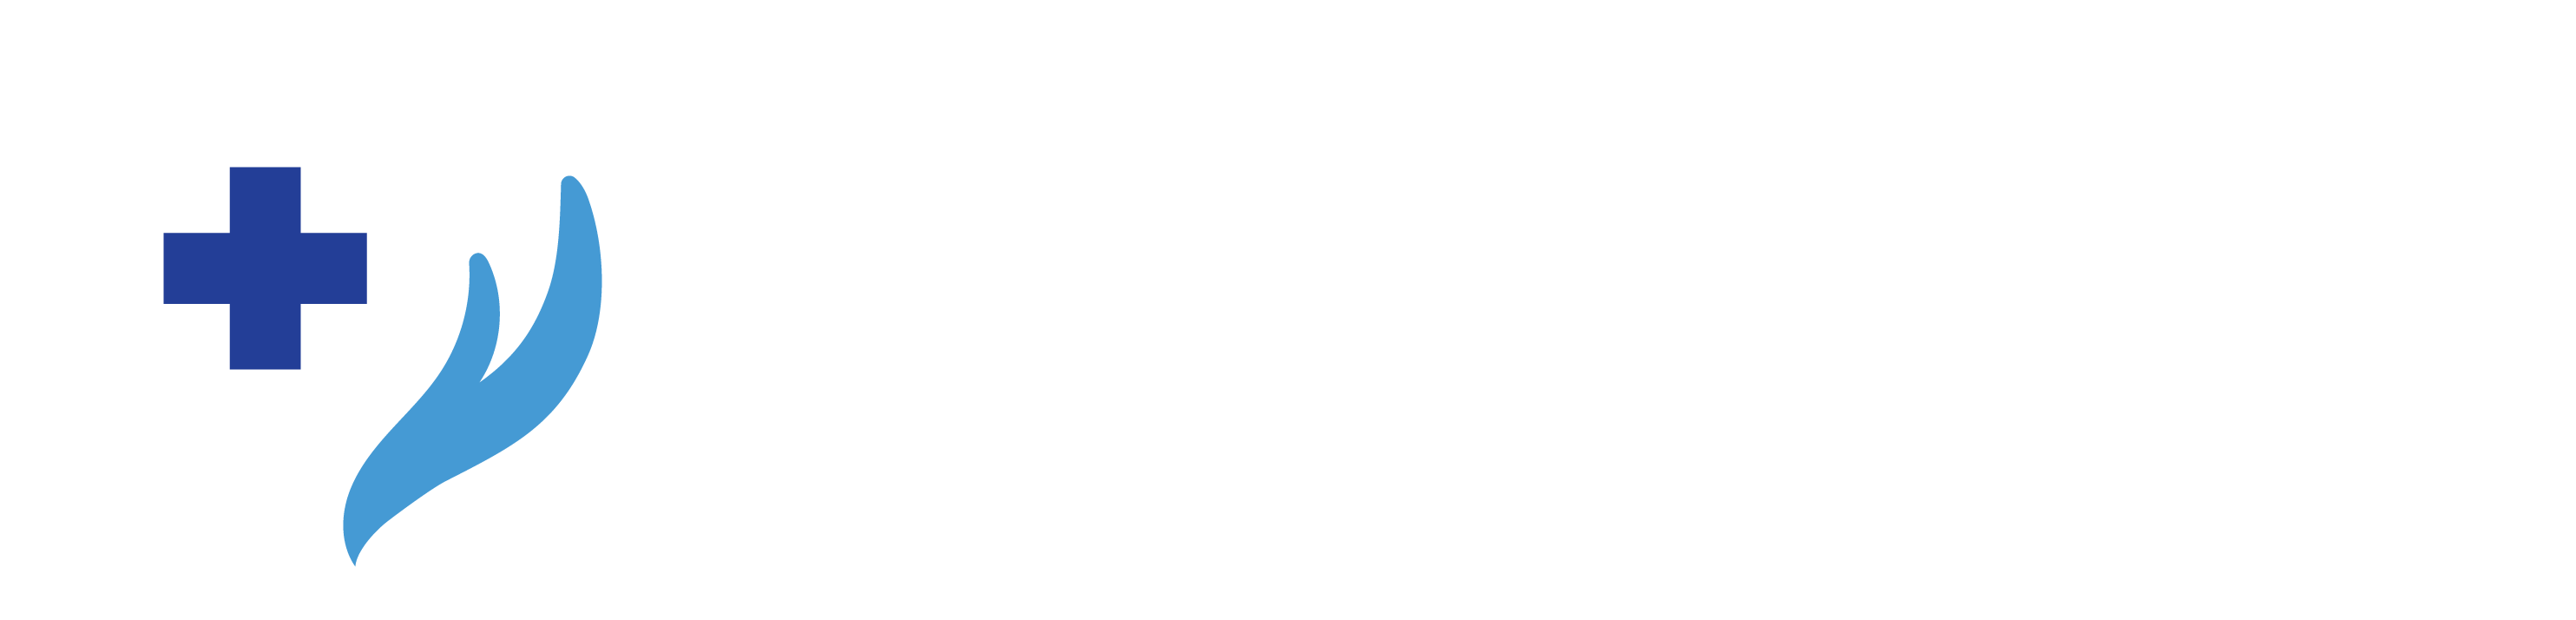 Cyrus Center